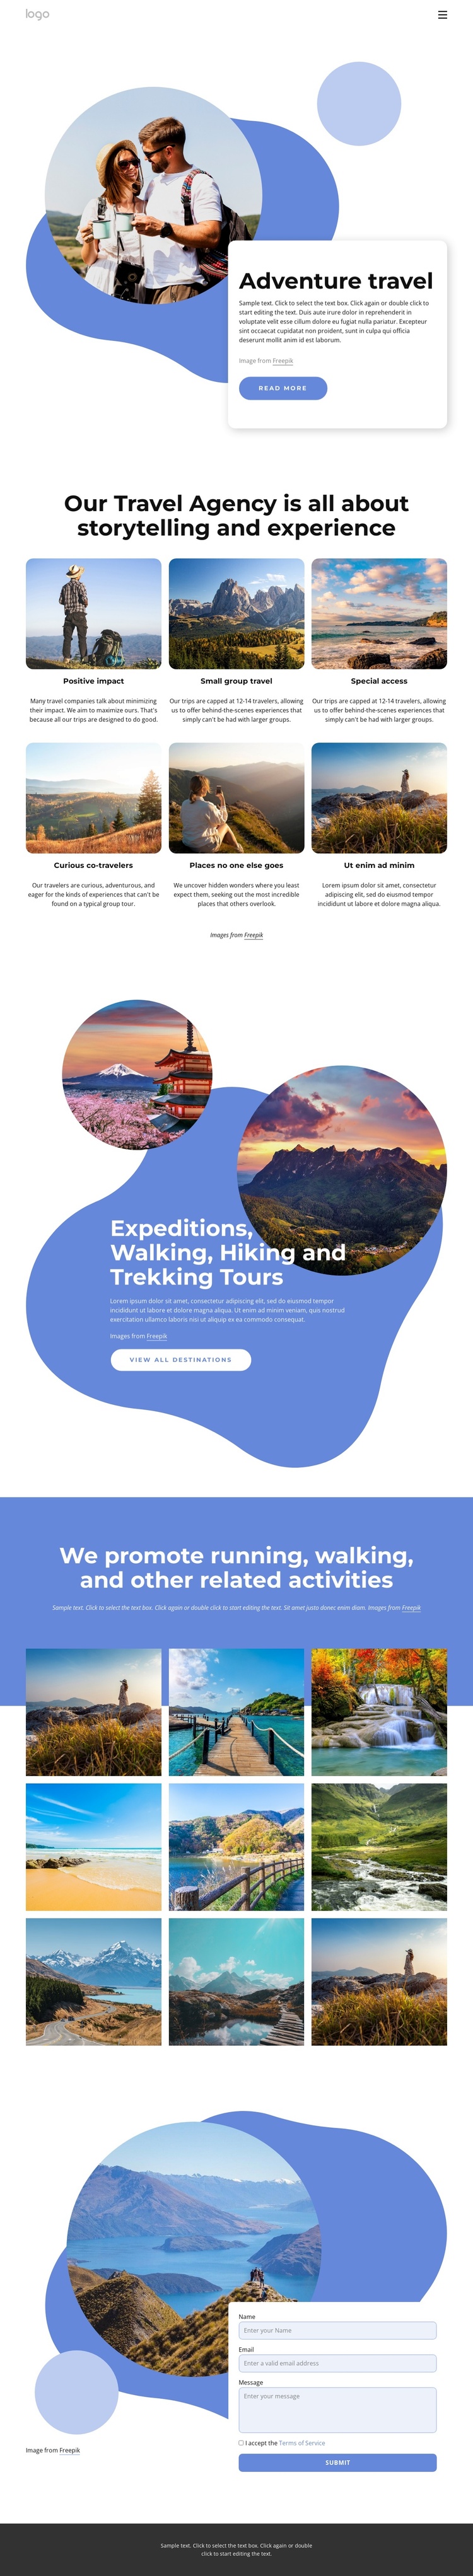 Agency specializing in luxury adventure travel Joomla Template